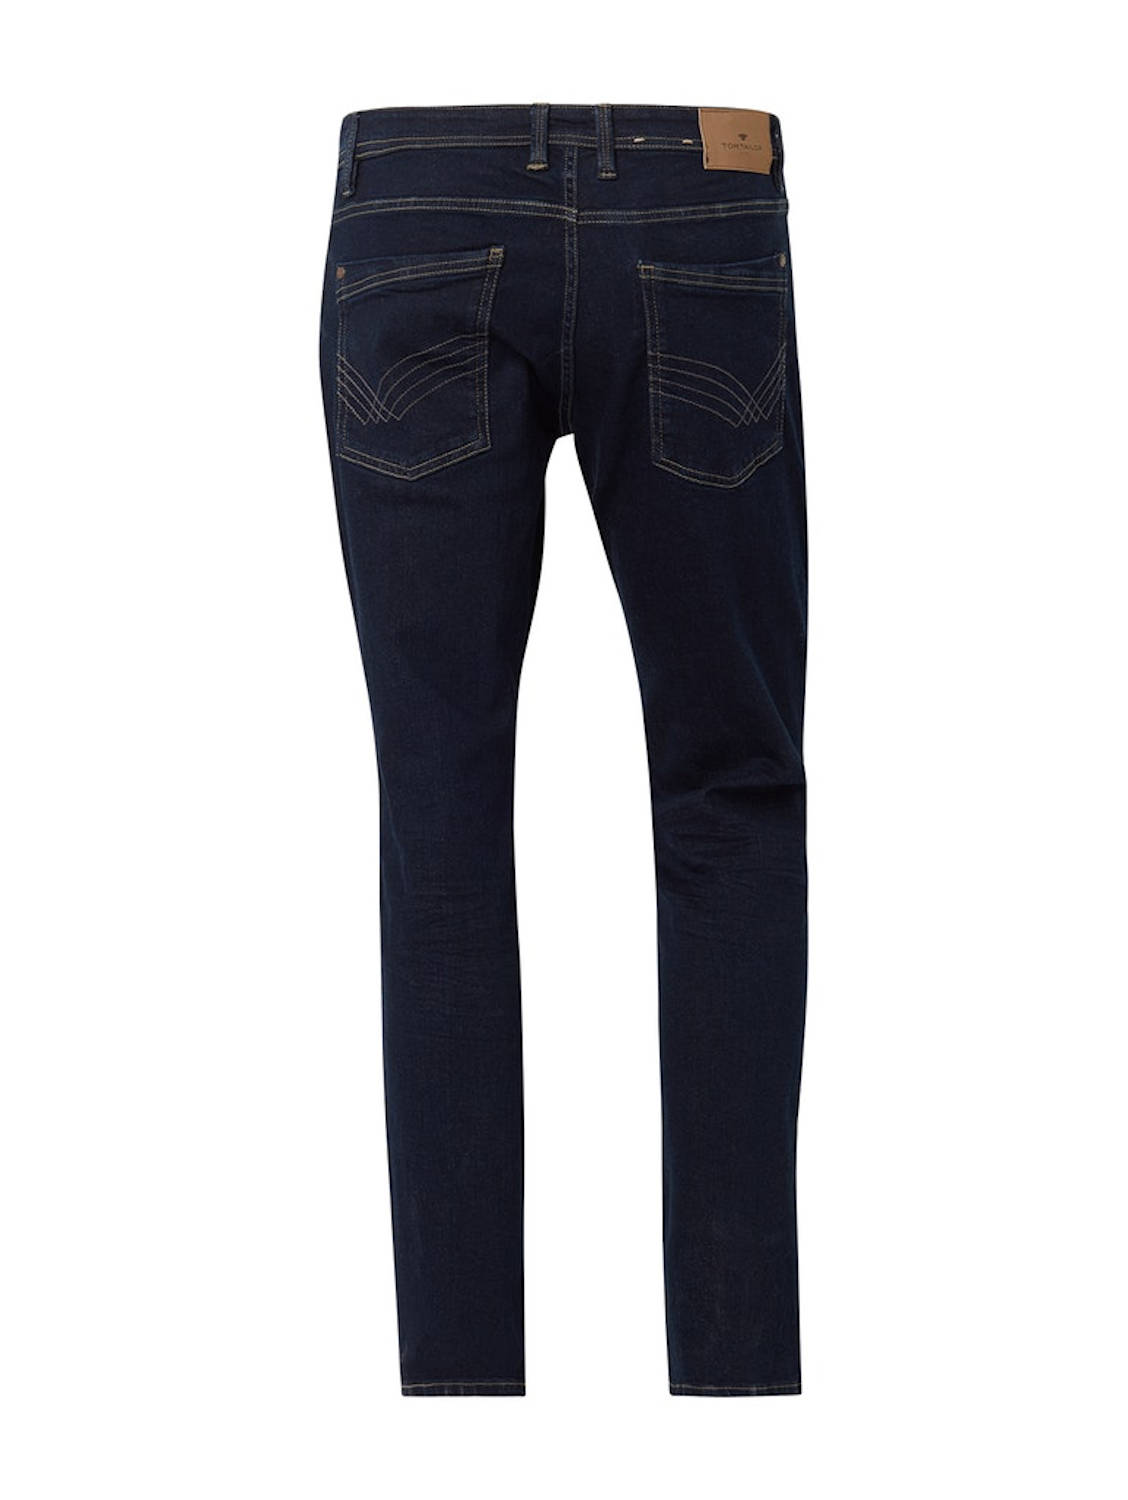 Tom Tailor Mens Josh Regular Slim Jeans Denim Stretch Five Pocket Trousers | eBay